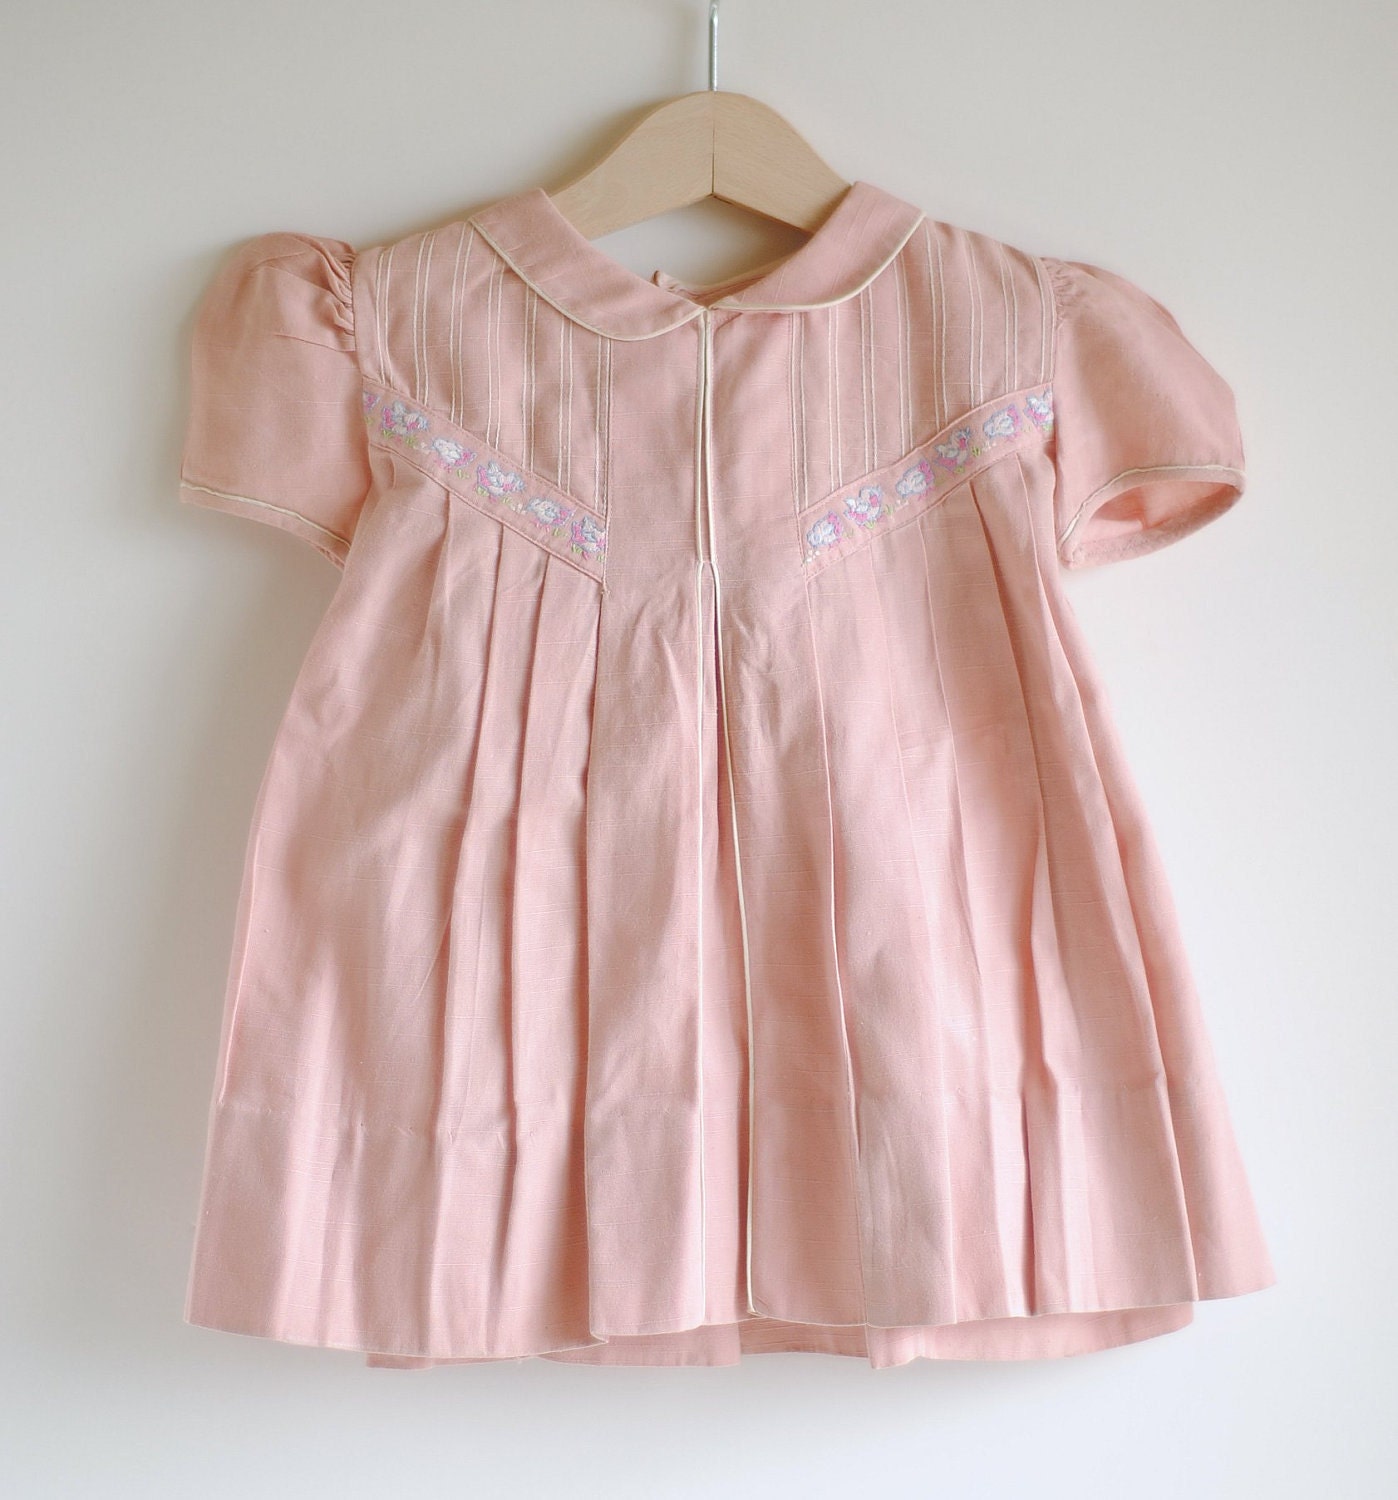 Vintage 1940's Toddler Girl Dress Pink CHICKS by HartandSew